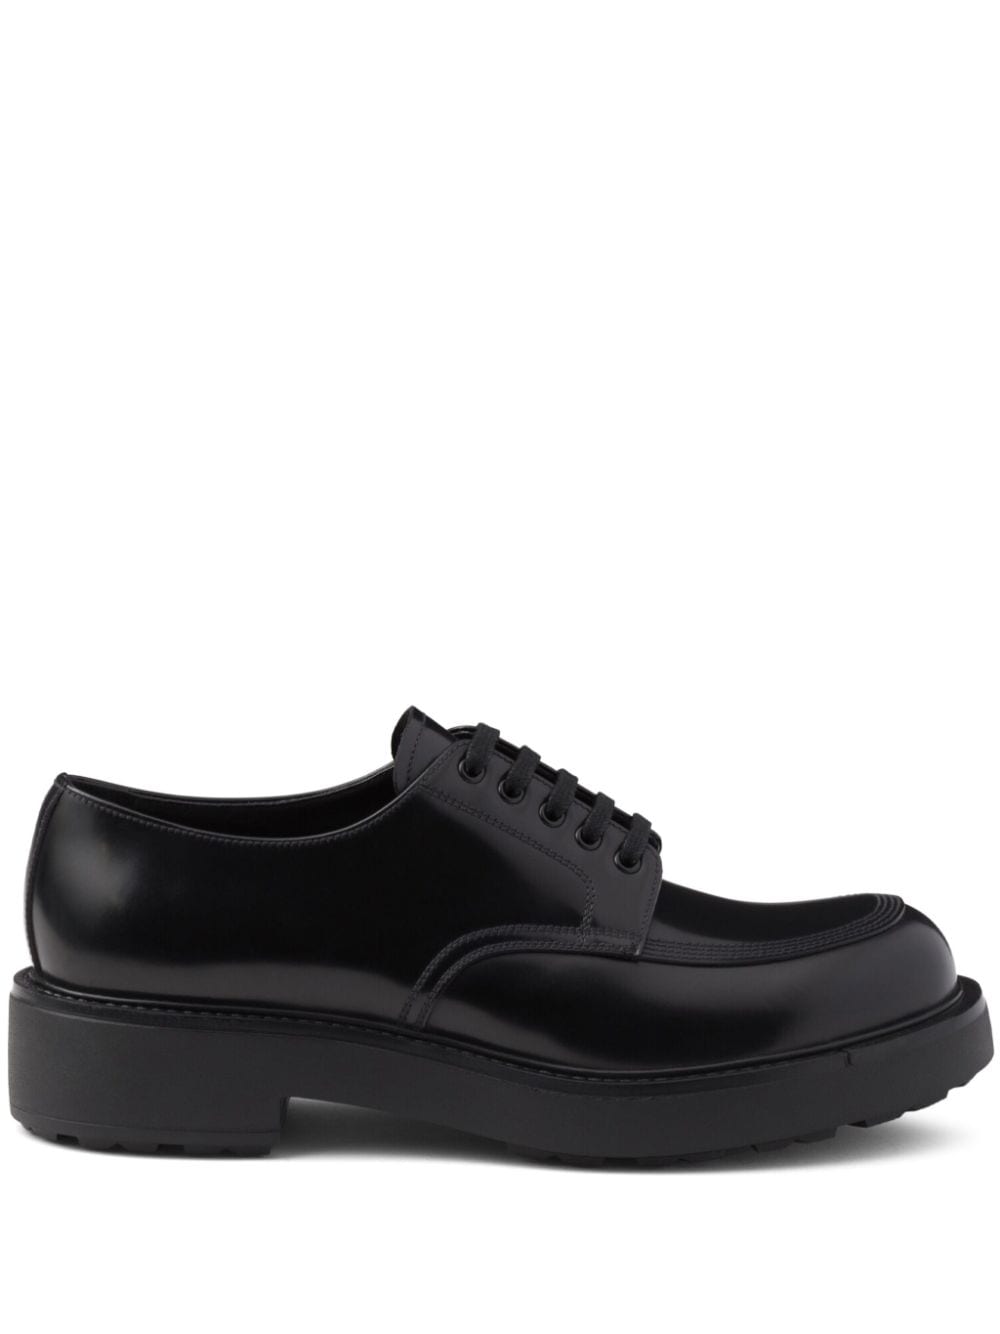 Prada brushed leather derby shoes Black